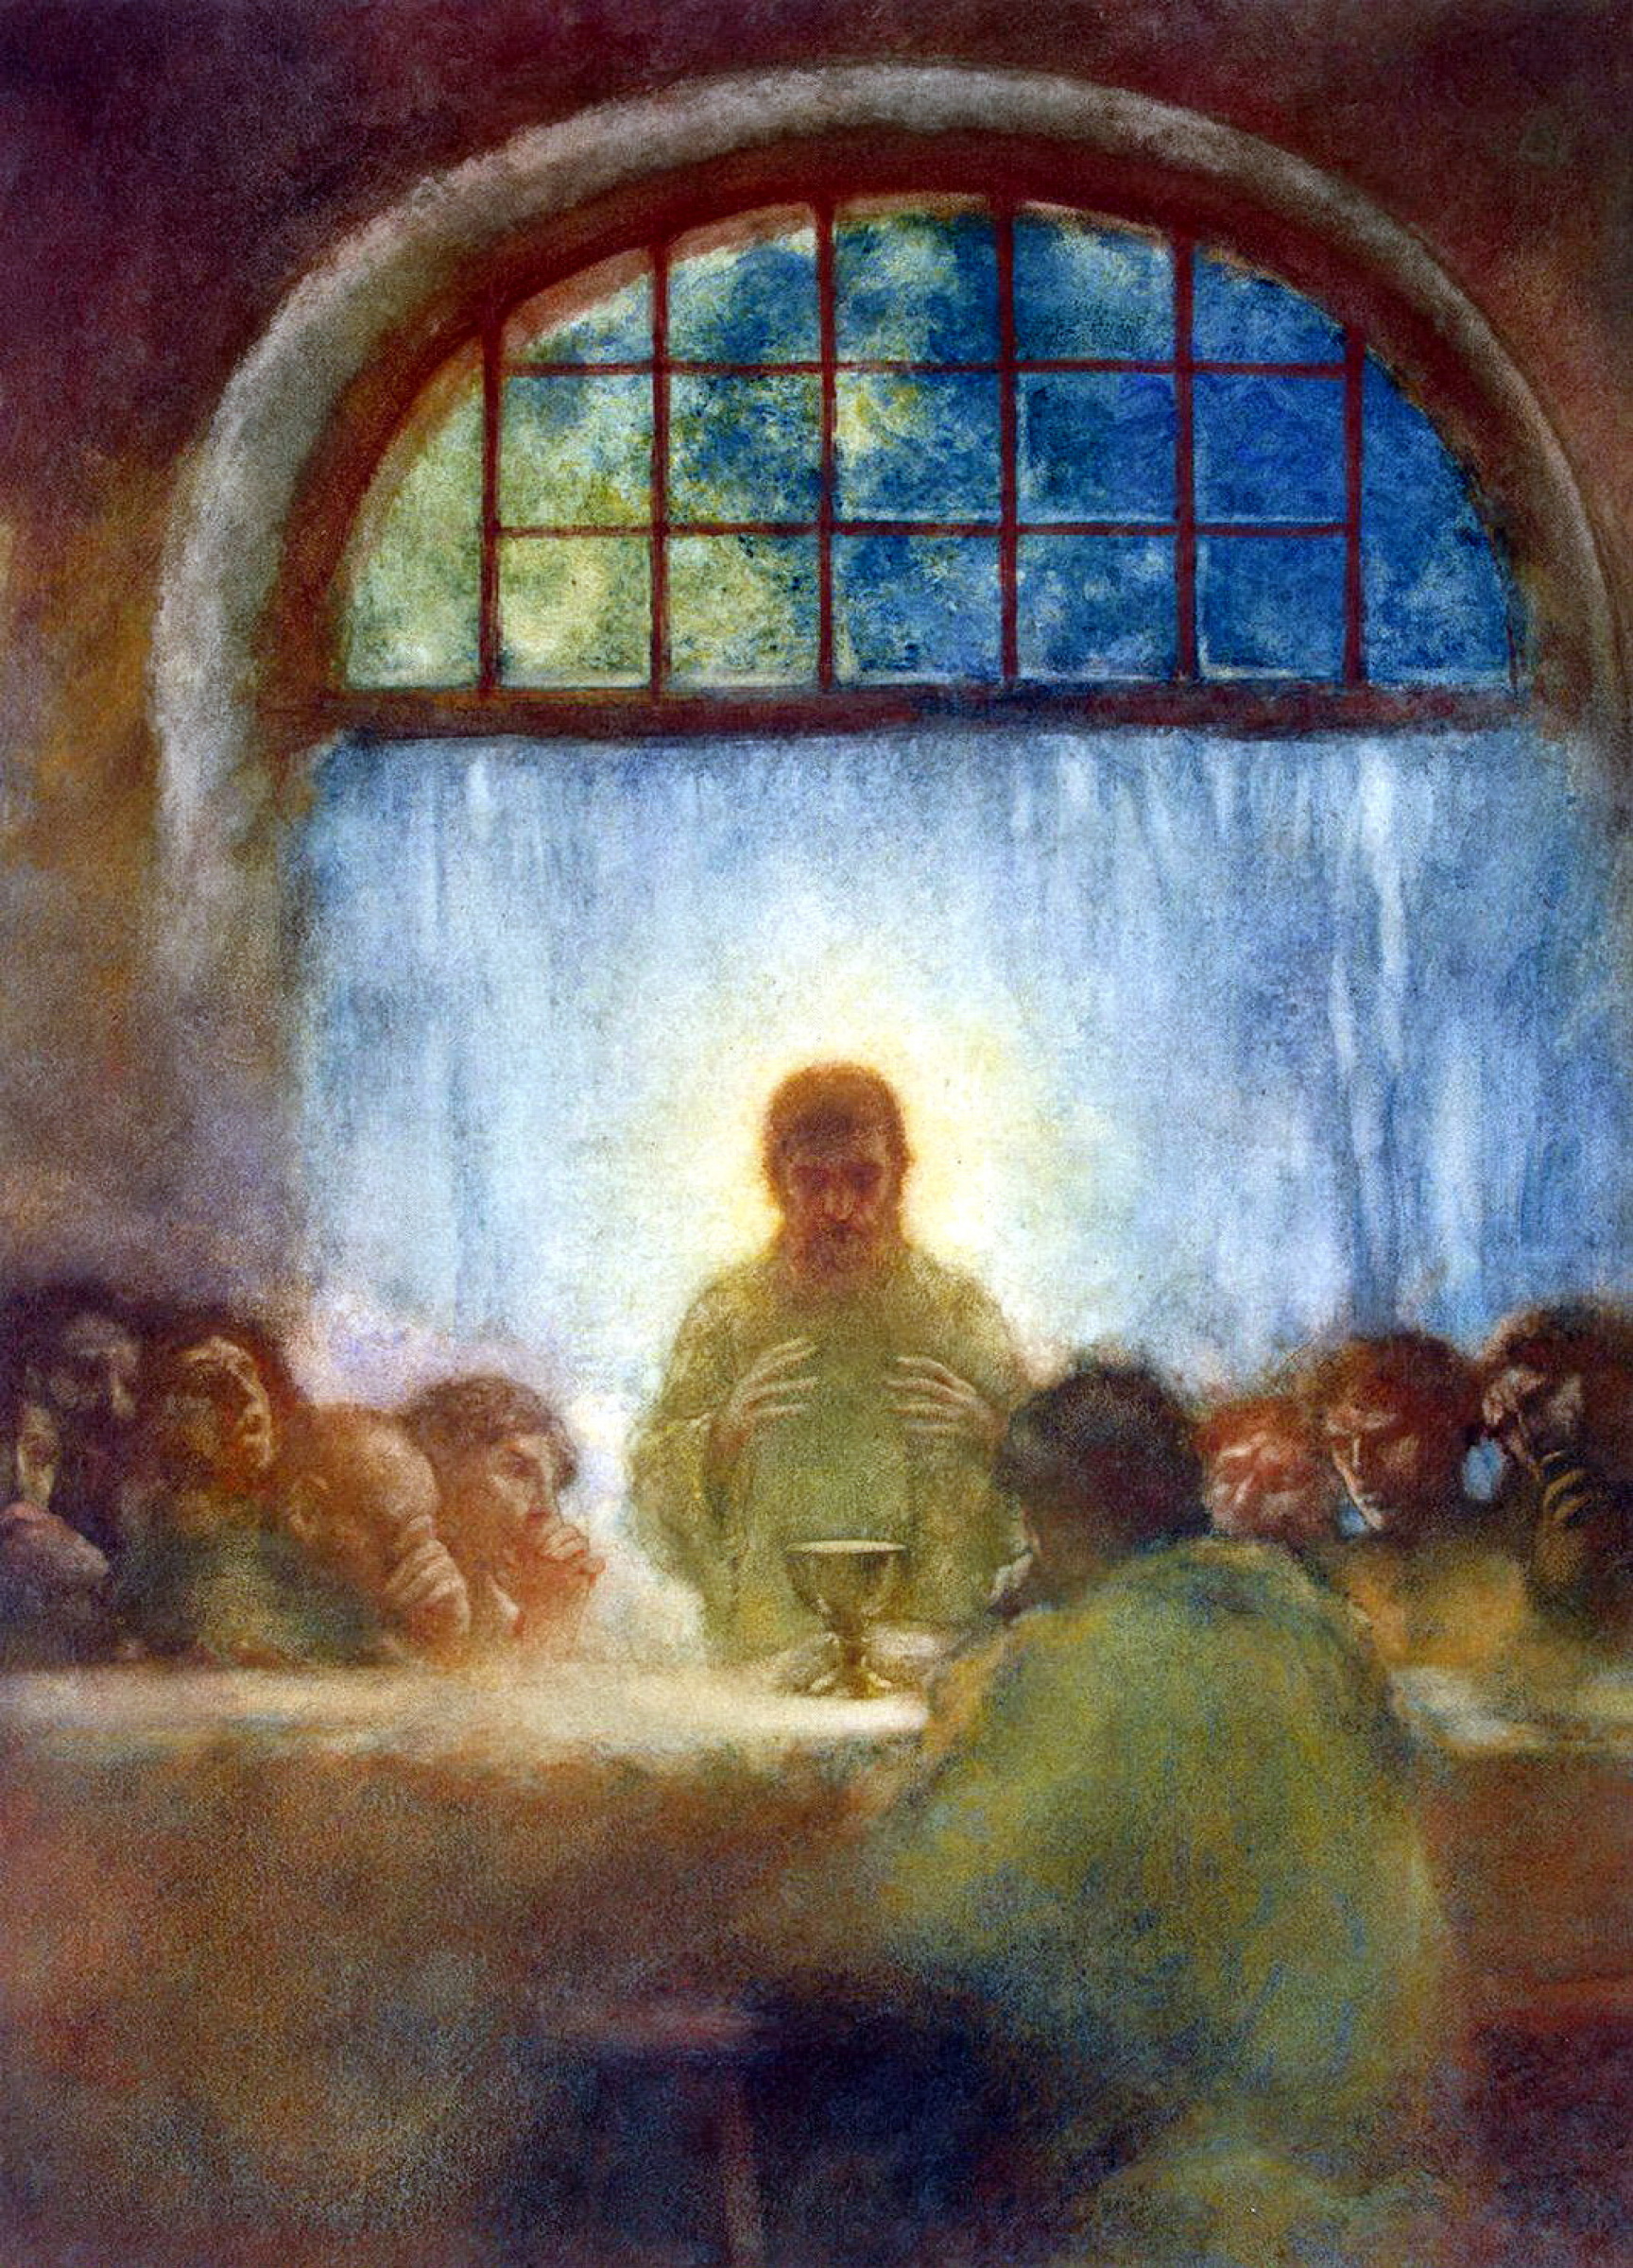 The Last Supper (Illustration) - World History Encyclopedia